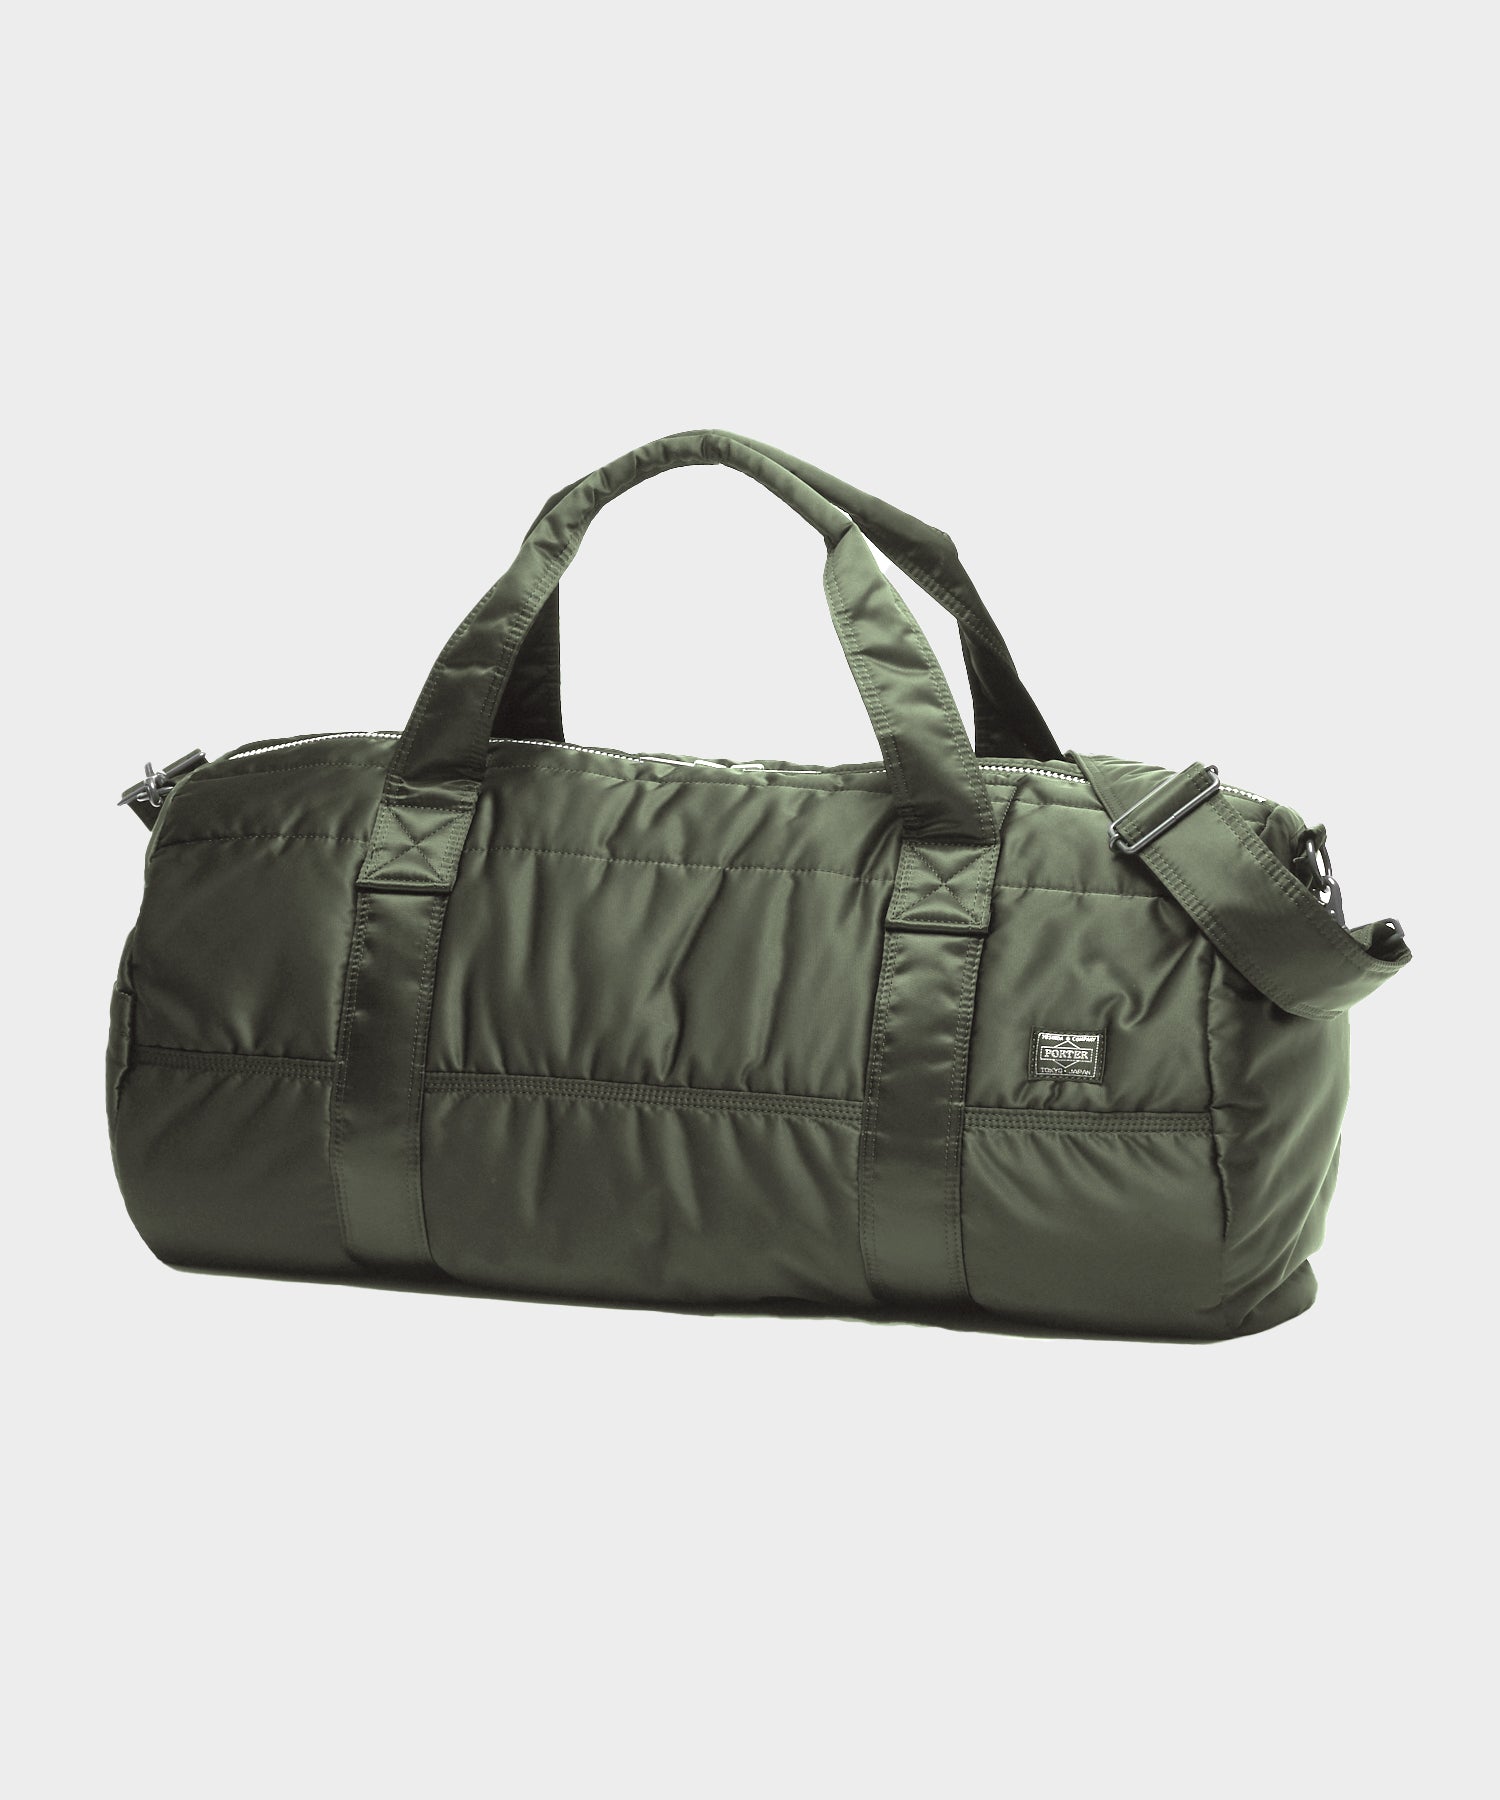 Porter-Yoshida & Co. Tanker 2-Way Duffle Bag in Olive